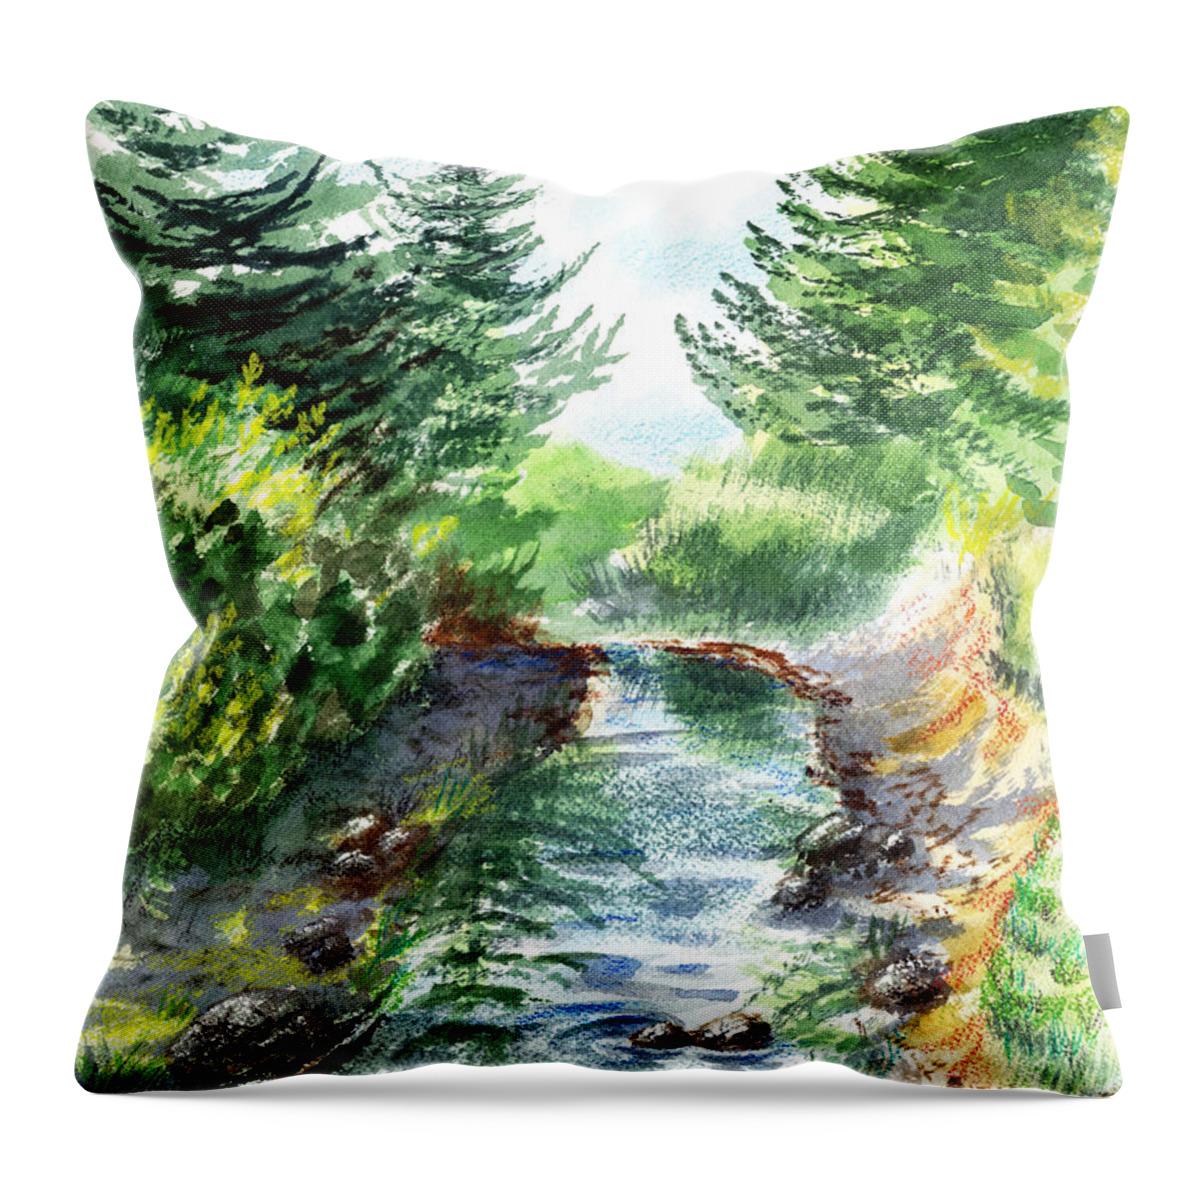 Forest Creek Throw Pillow featuring the painting Forest Creek by Irina Sztukowski